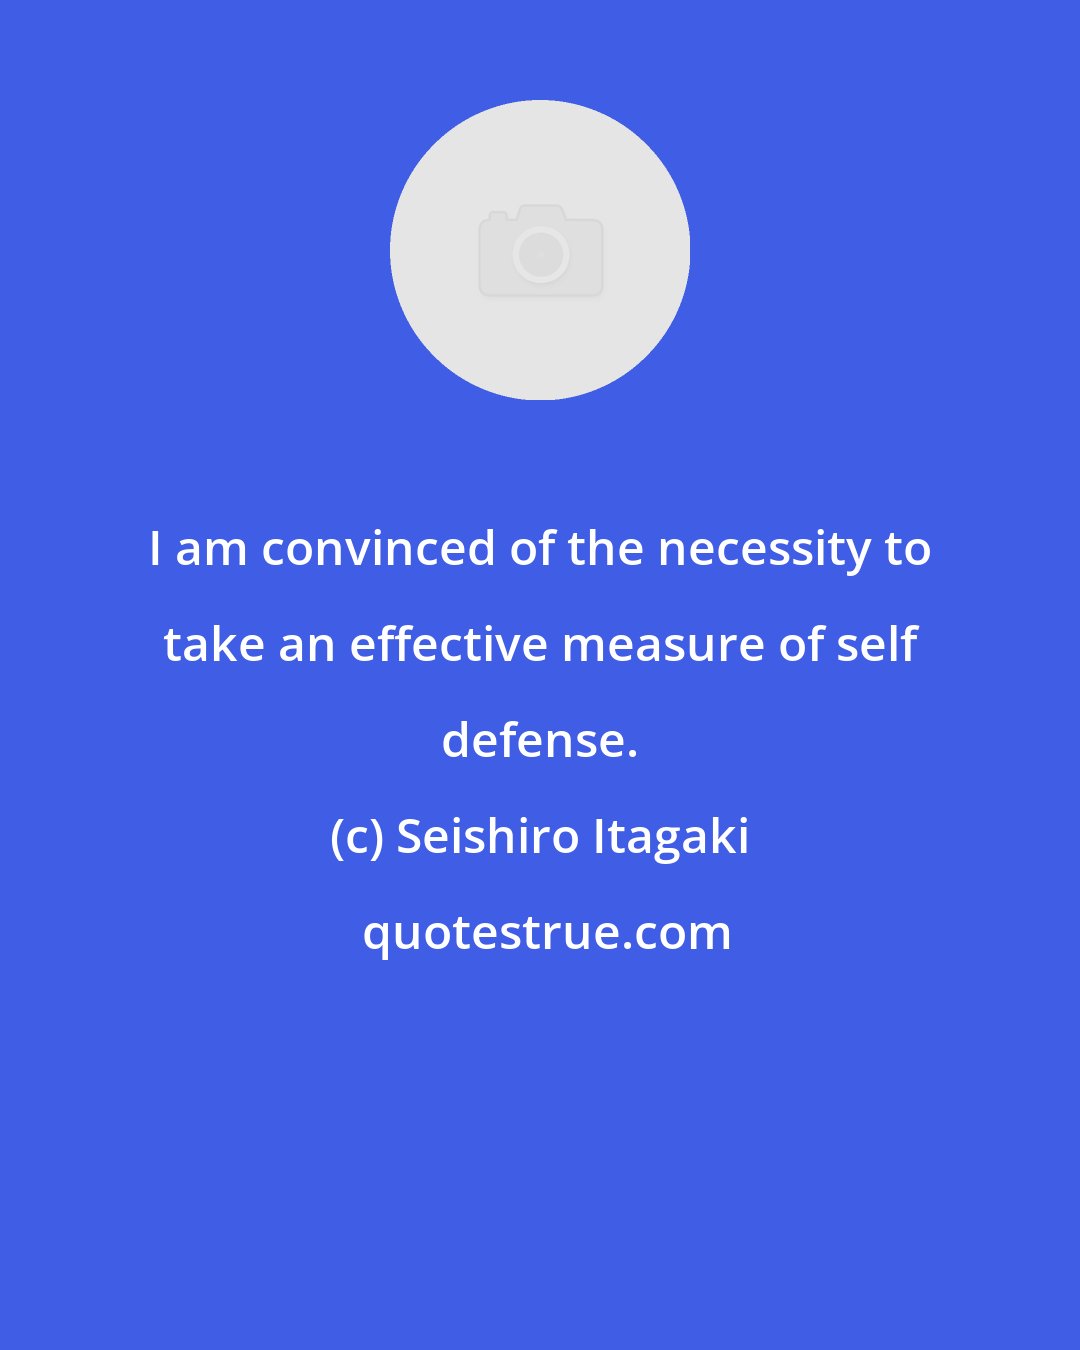 Seishiro Itagaki: I am convinced of the necessity to take an effective measure of self defense.